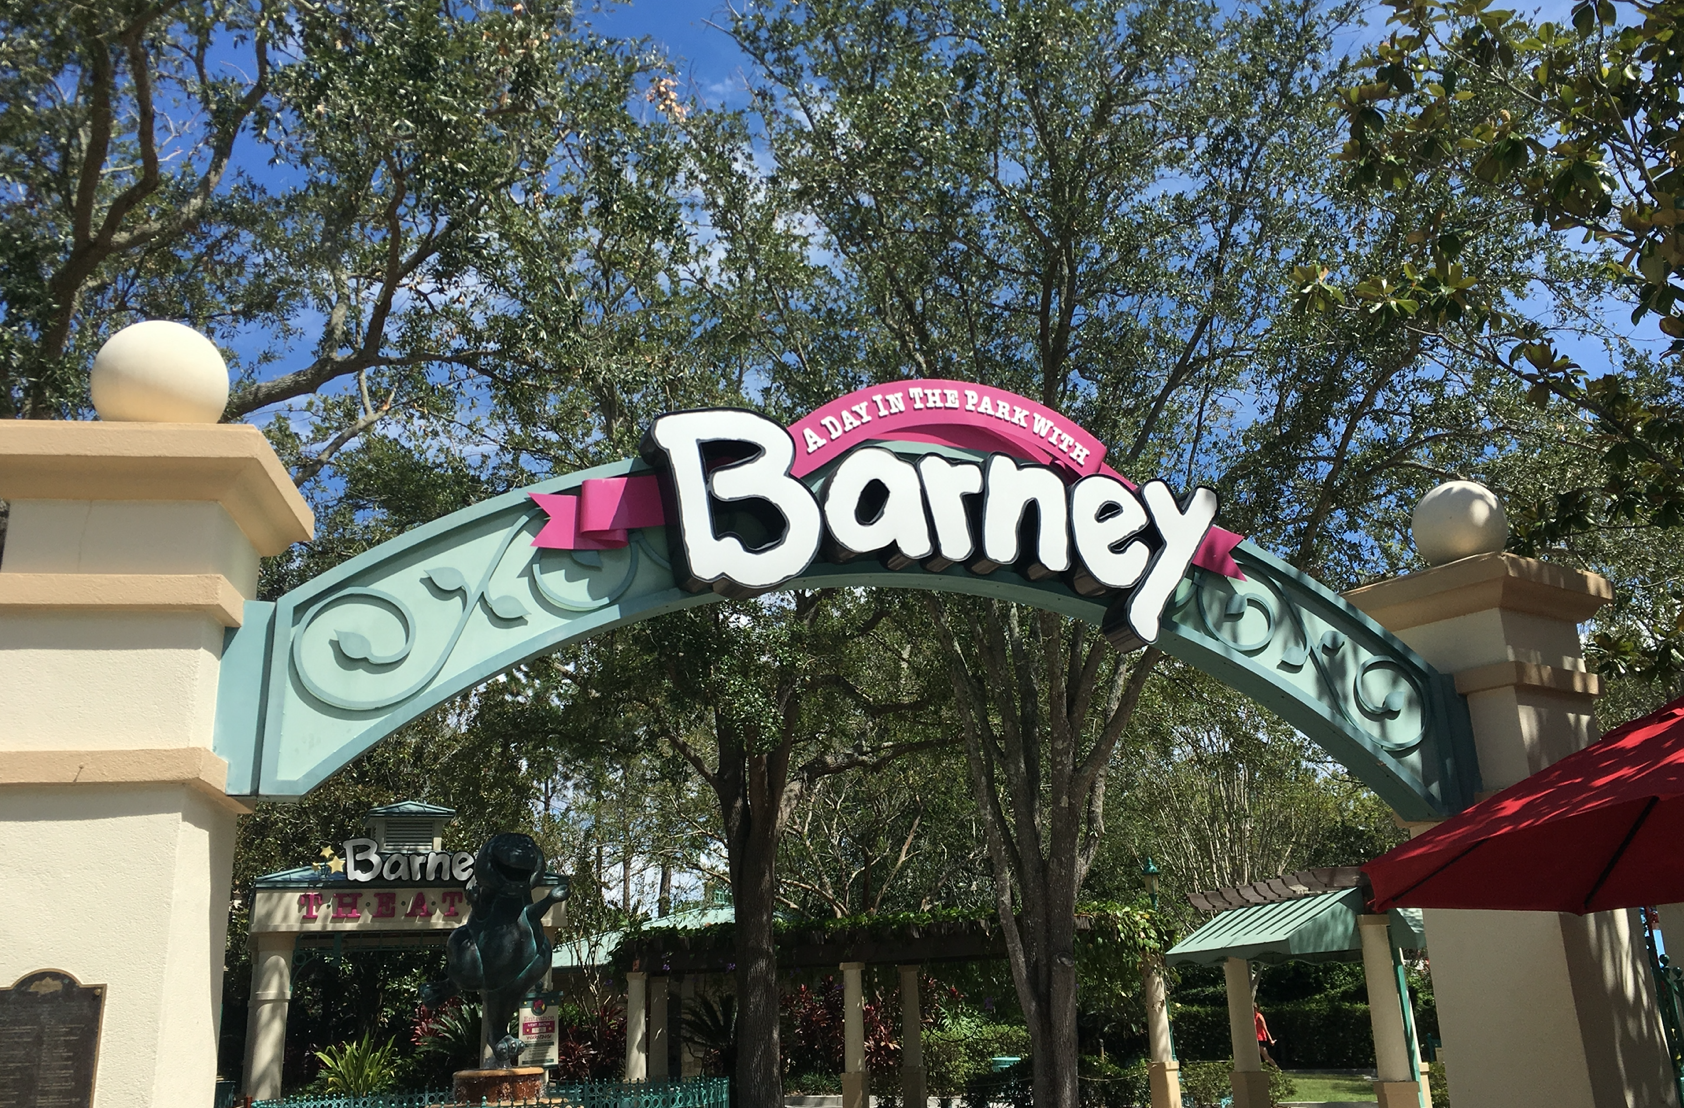 Barney Show Gateway